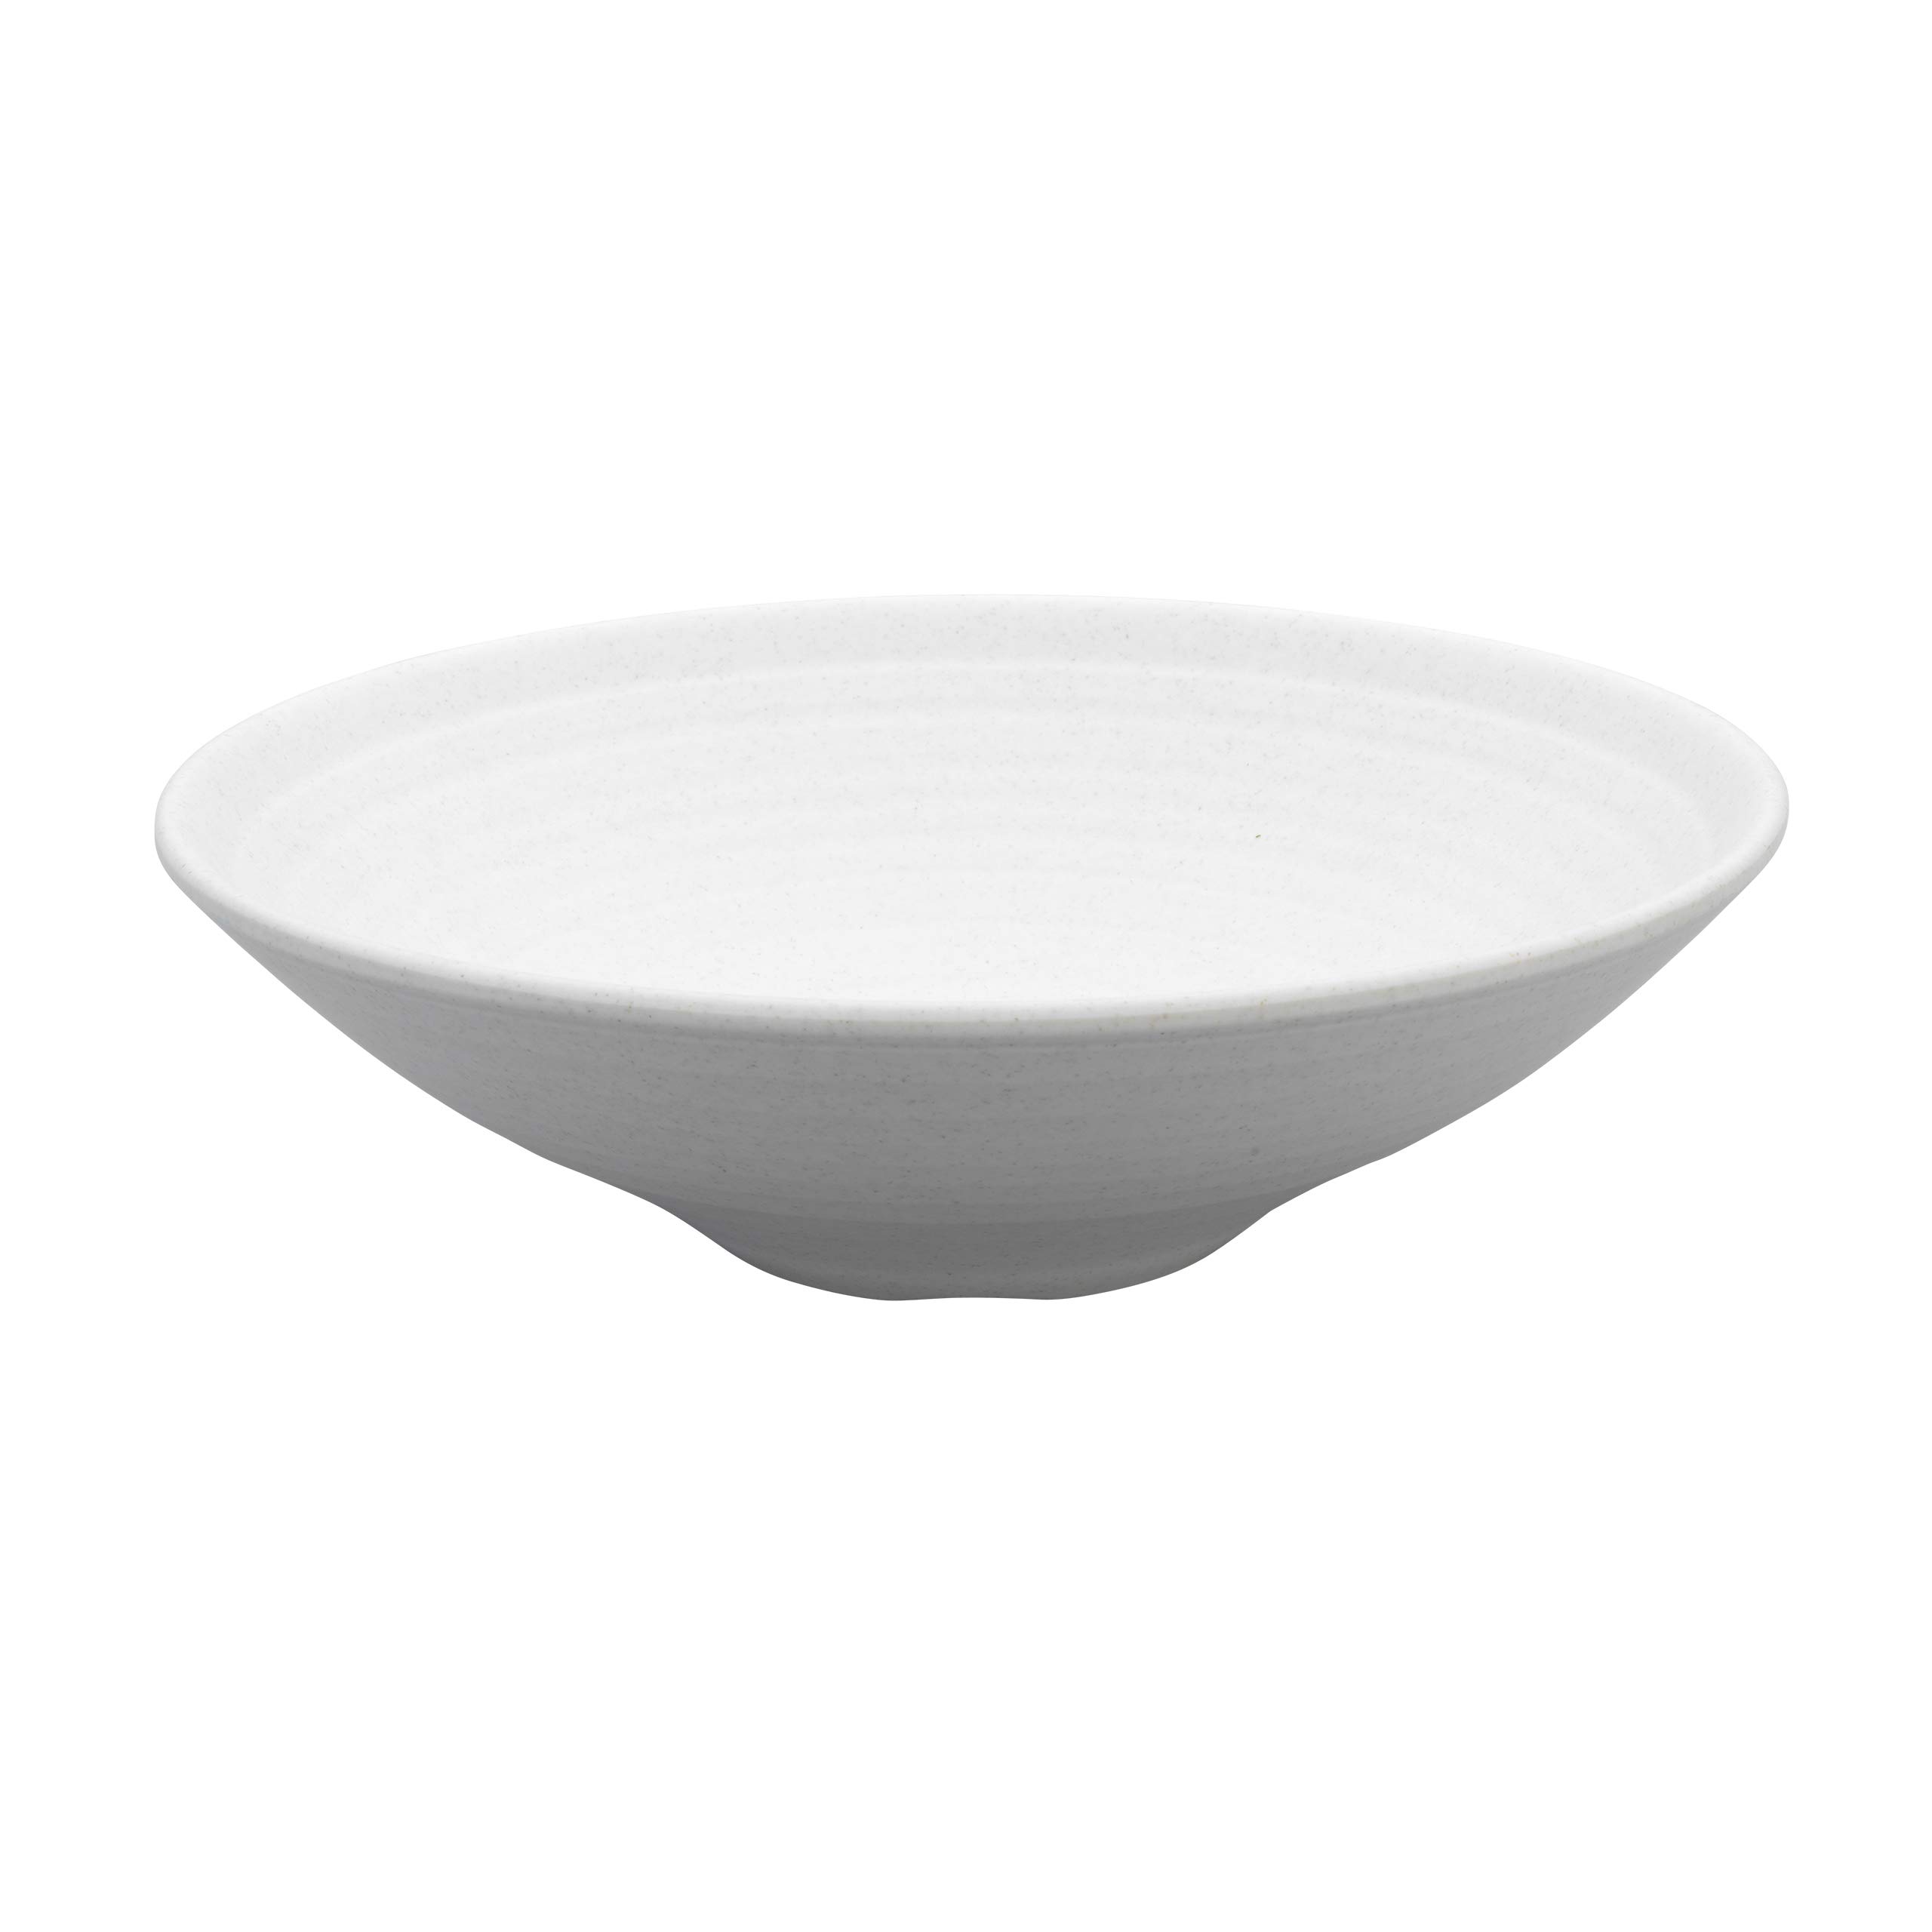 Melamine (Plastic) 34 oz Coupe Salad Bowl - Set of 4 - White - Commercial-Grade - 700015